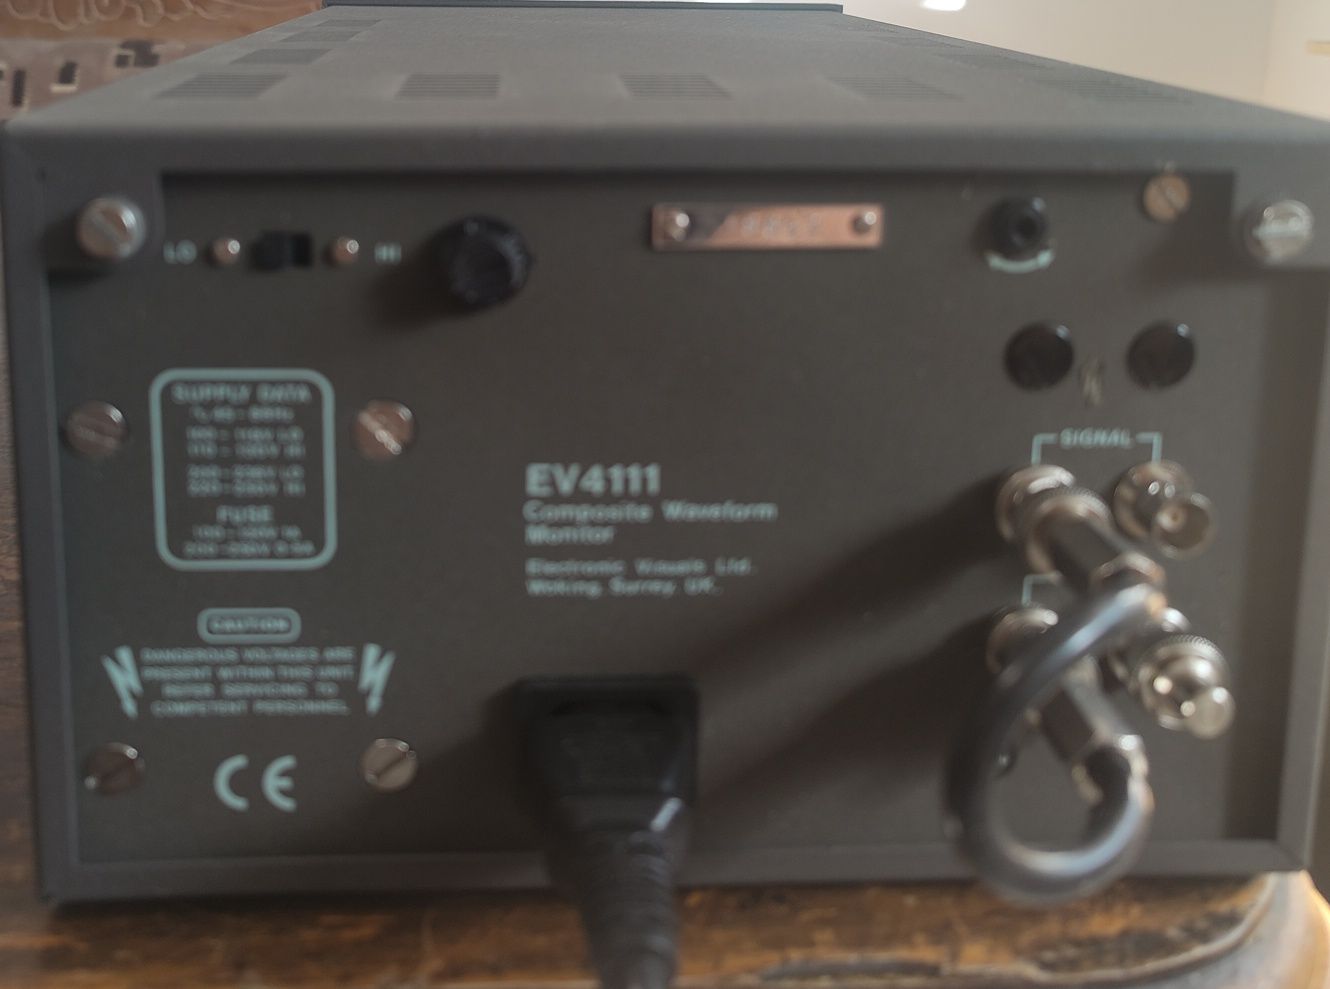 Waverom Composite Monitor EV 4111